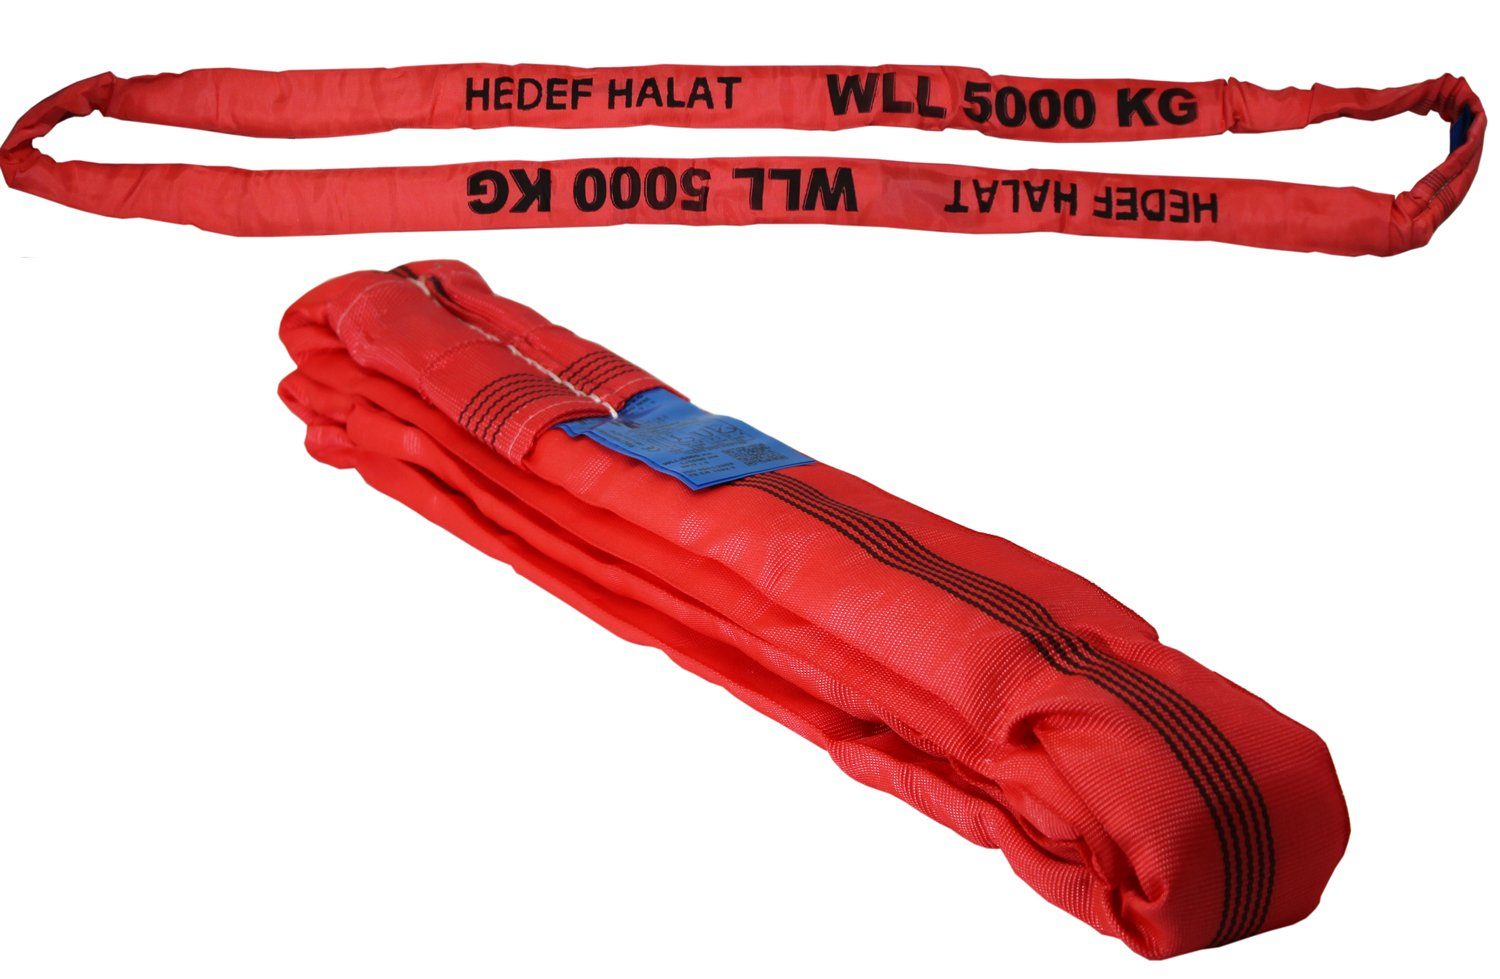 HEDEF HALAT Rundschlinge mit Einfachmantel 5 Tonnen 10 Meter SF: 7/1 DIN EN 1492-2 Hebeband, Rundschlingen Bandschlinge Hebegurt 10 m (umfang 20 m) | Hebebänder